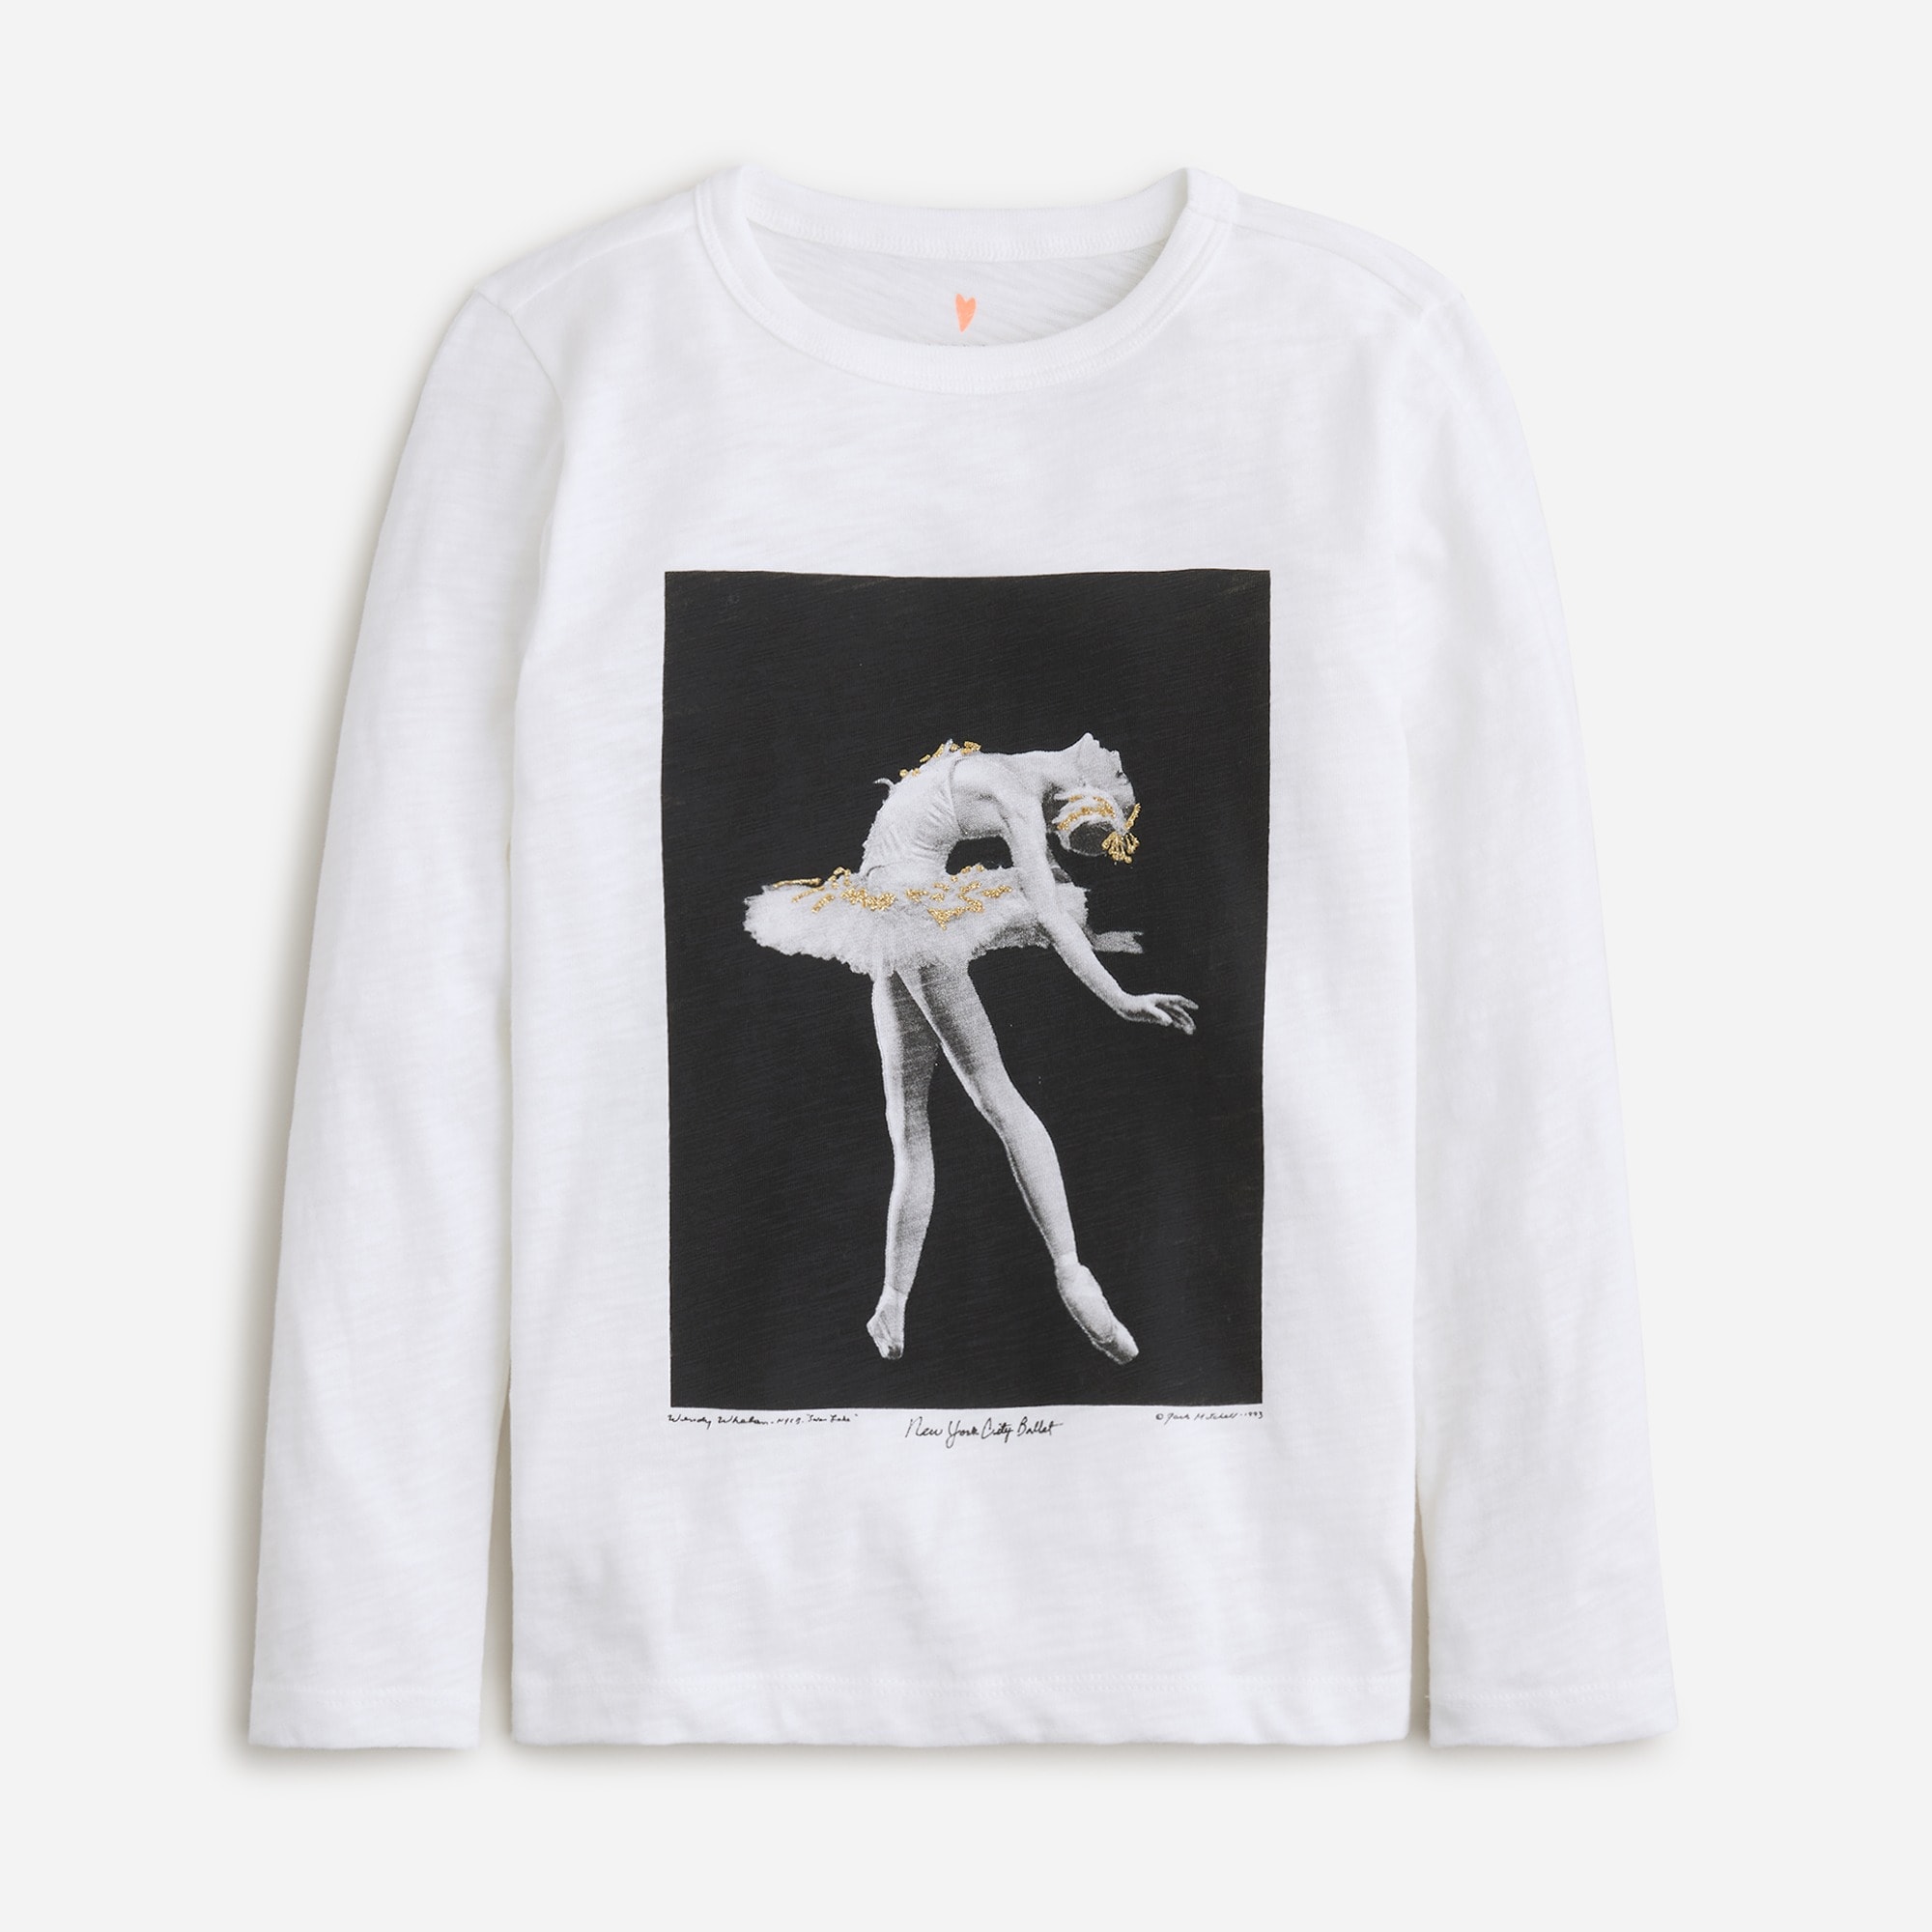  Girls' Limited-edition New York City Ballet X Crewcuts ballerina T-shirt